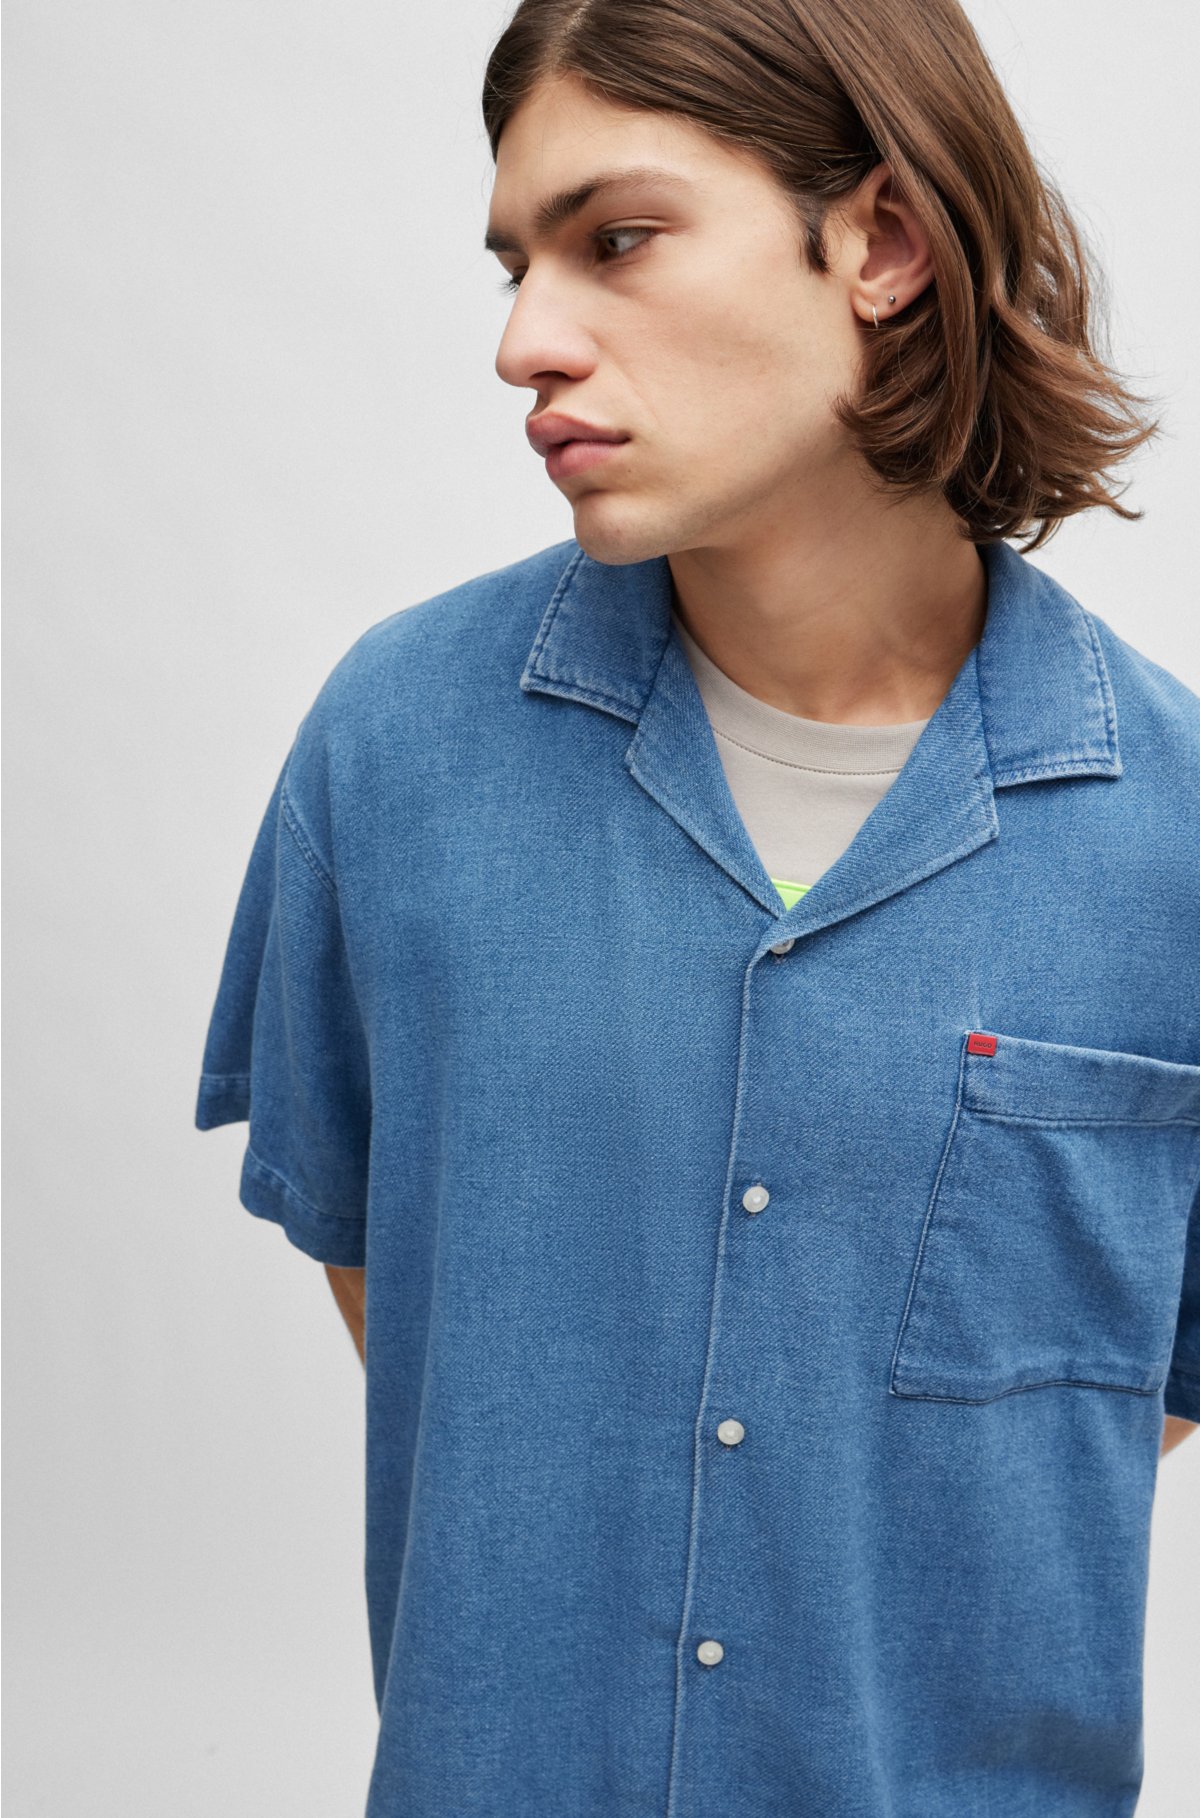 Oversize-fit short-sleeved shirt in blue cotton denim